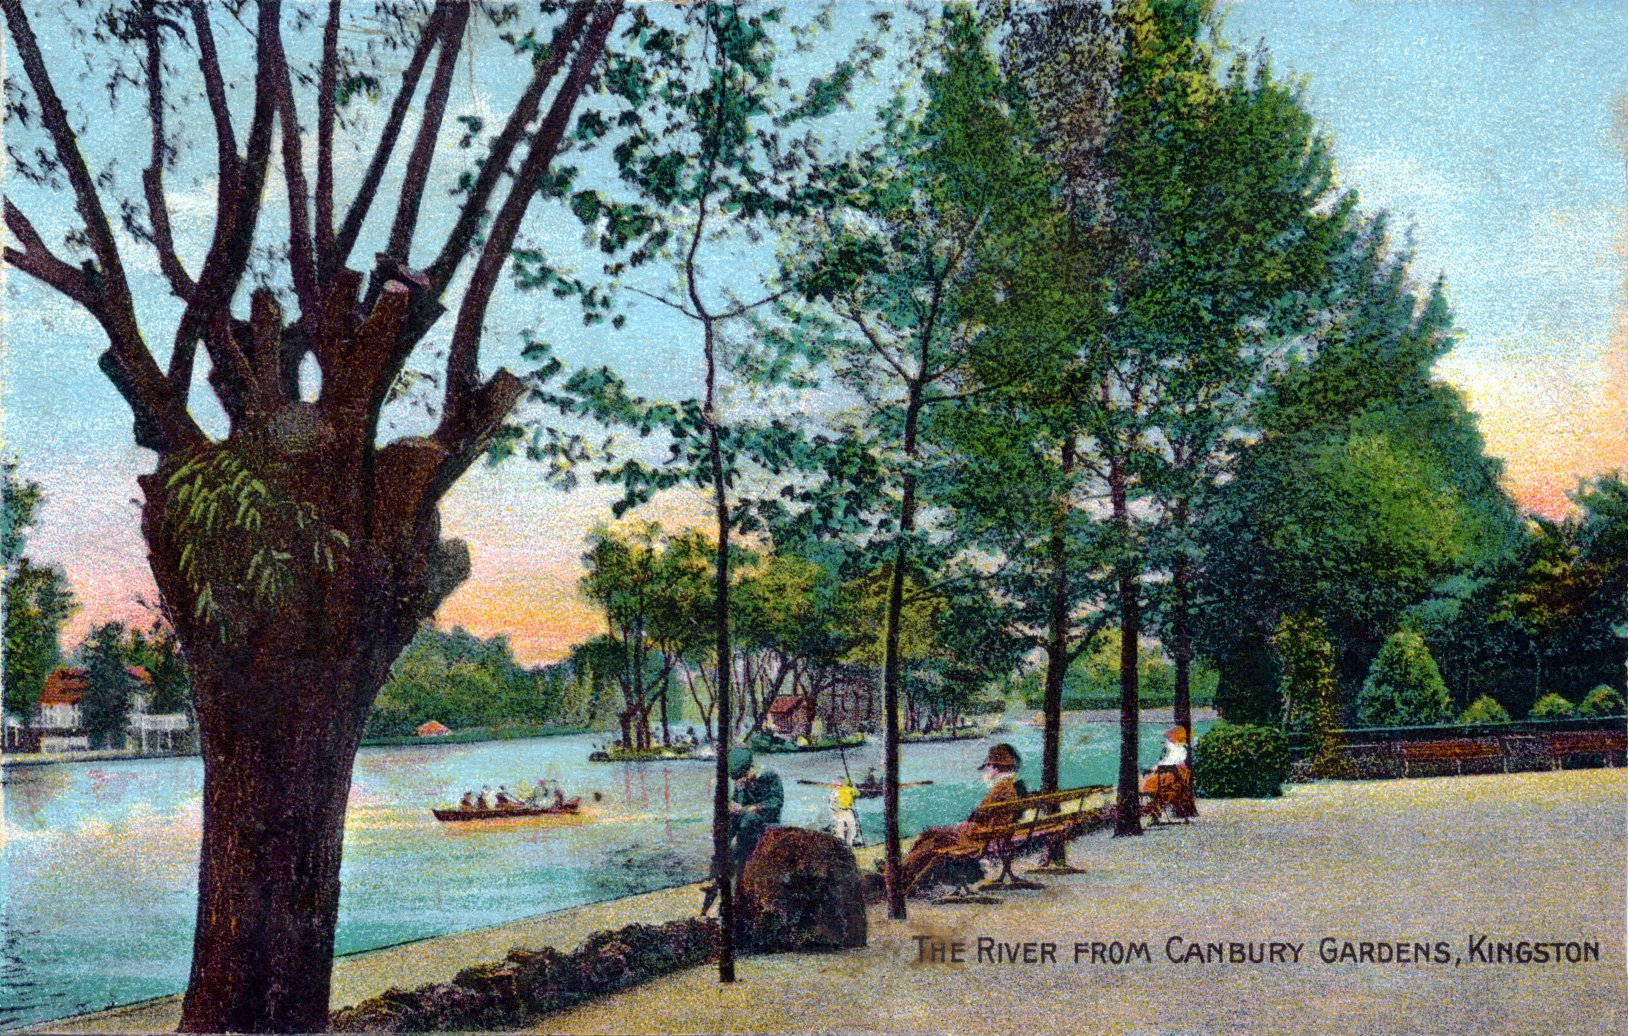 Kingston Canbury Gardens,river view